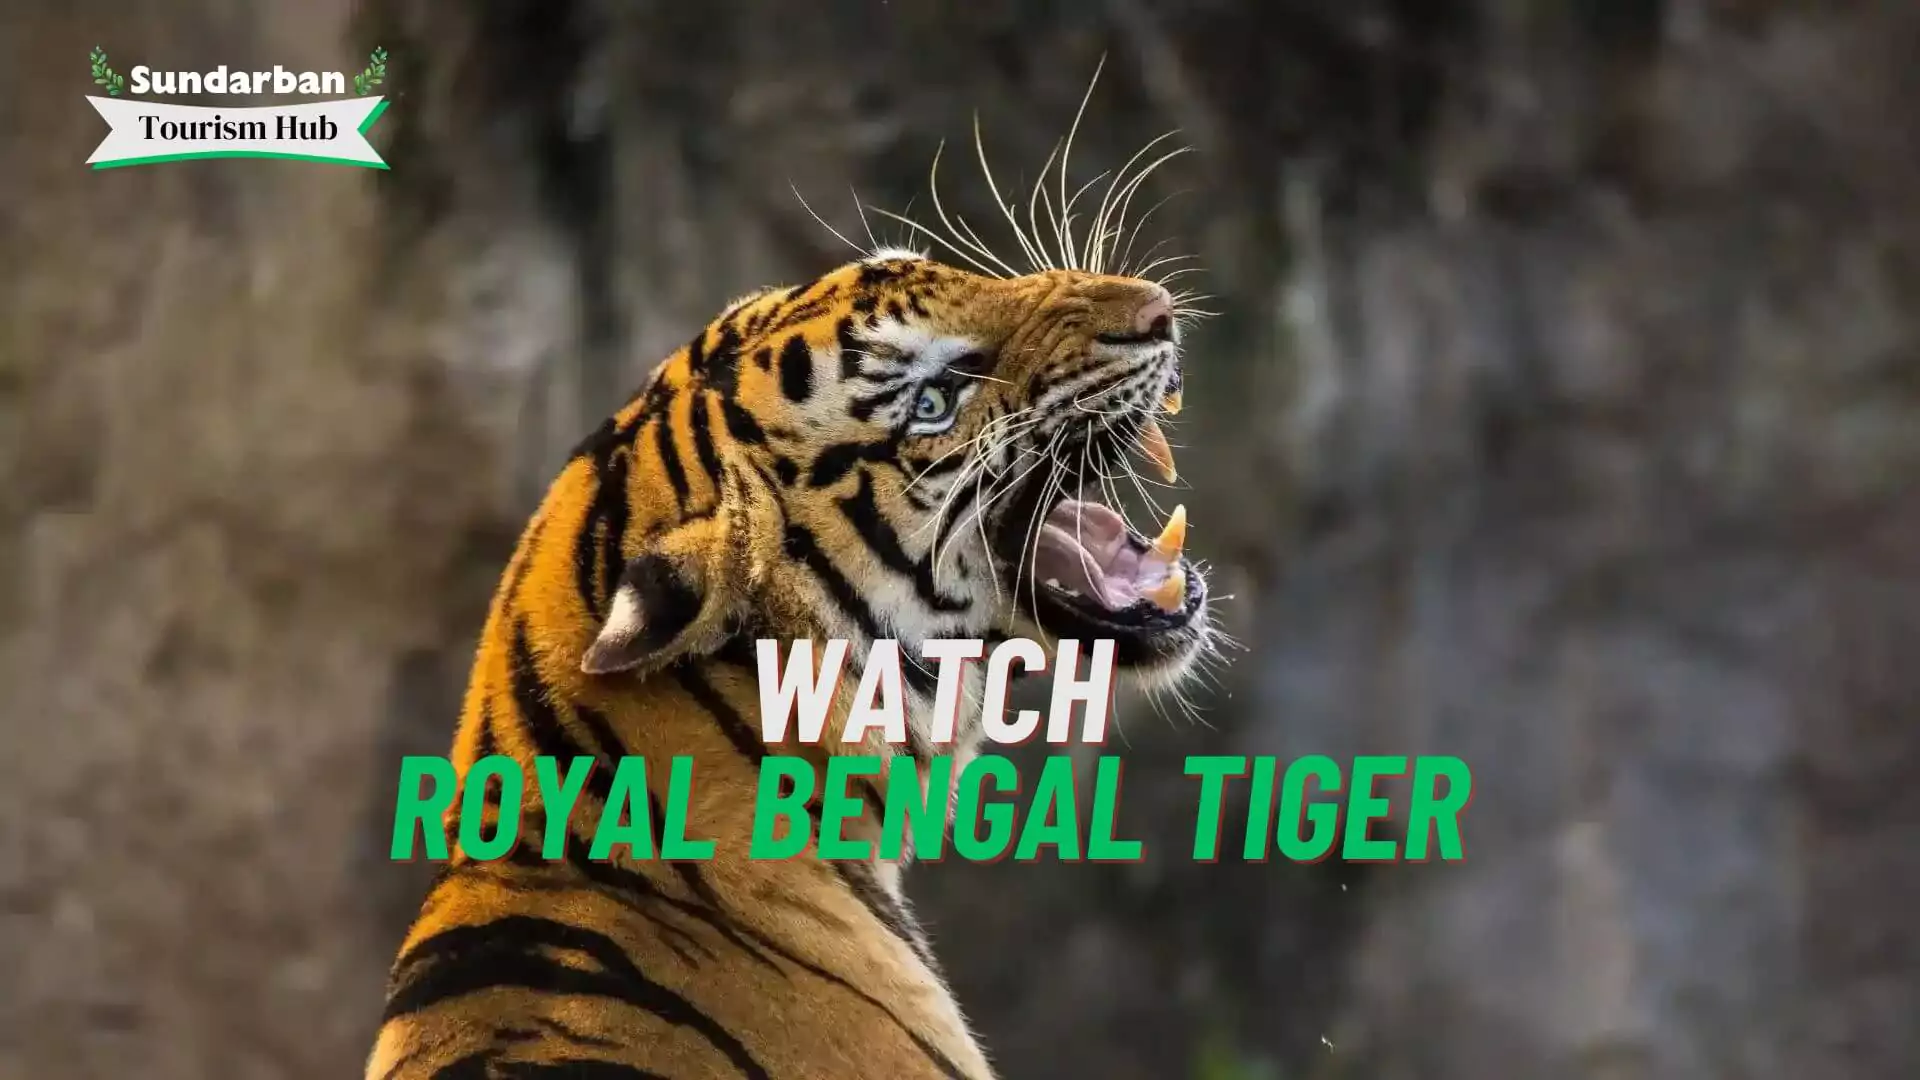 Royal Bengal Tiger Sundarban Tourism Hub